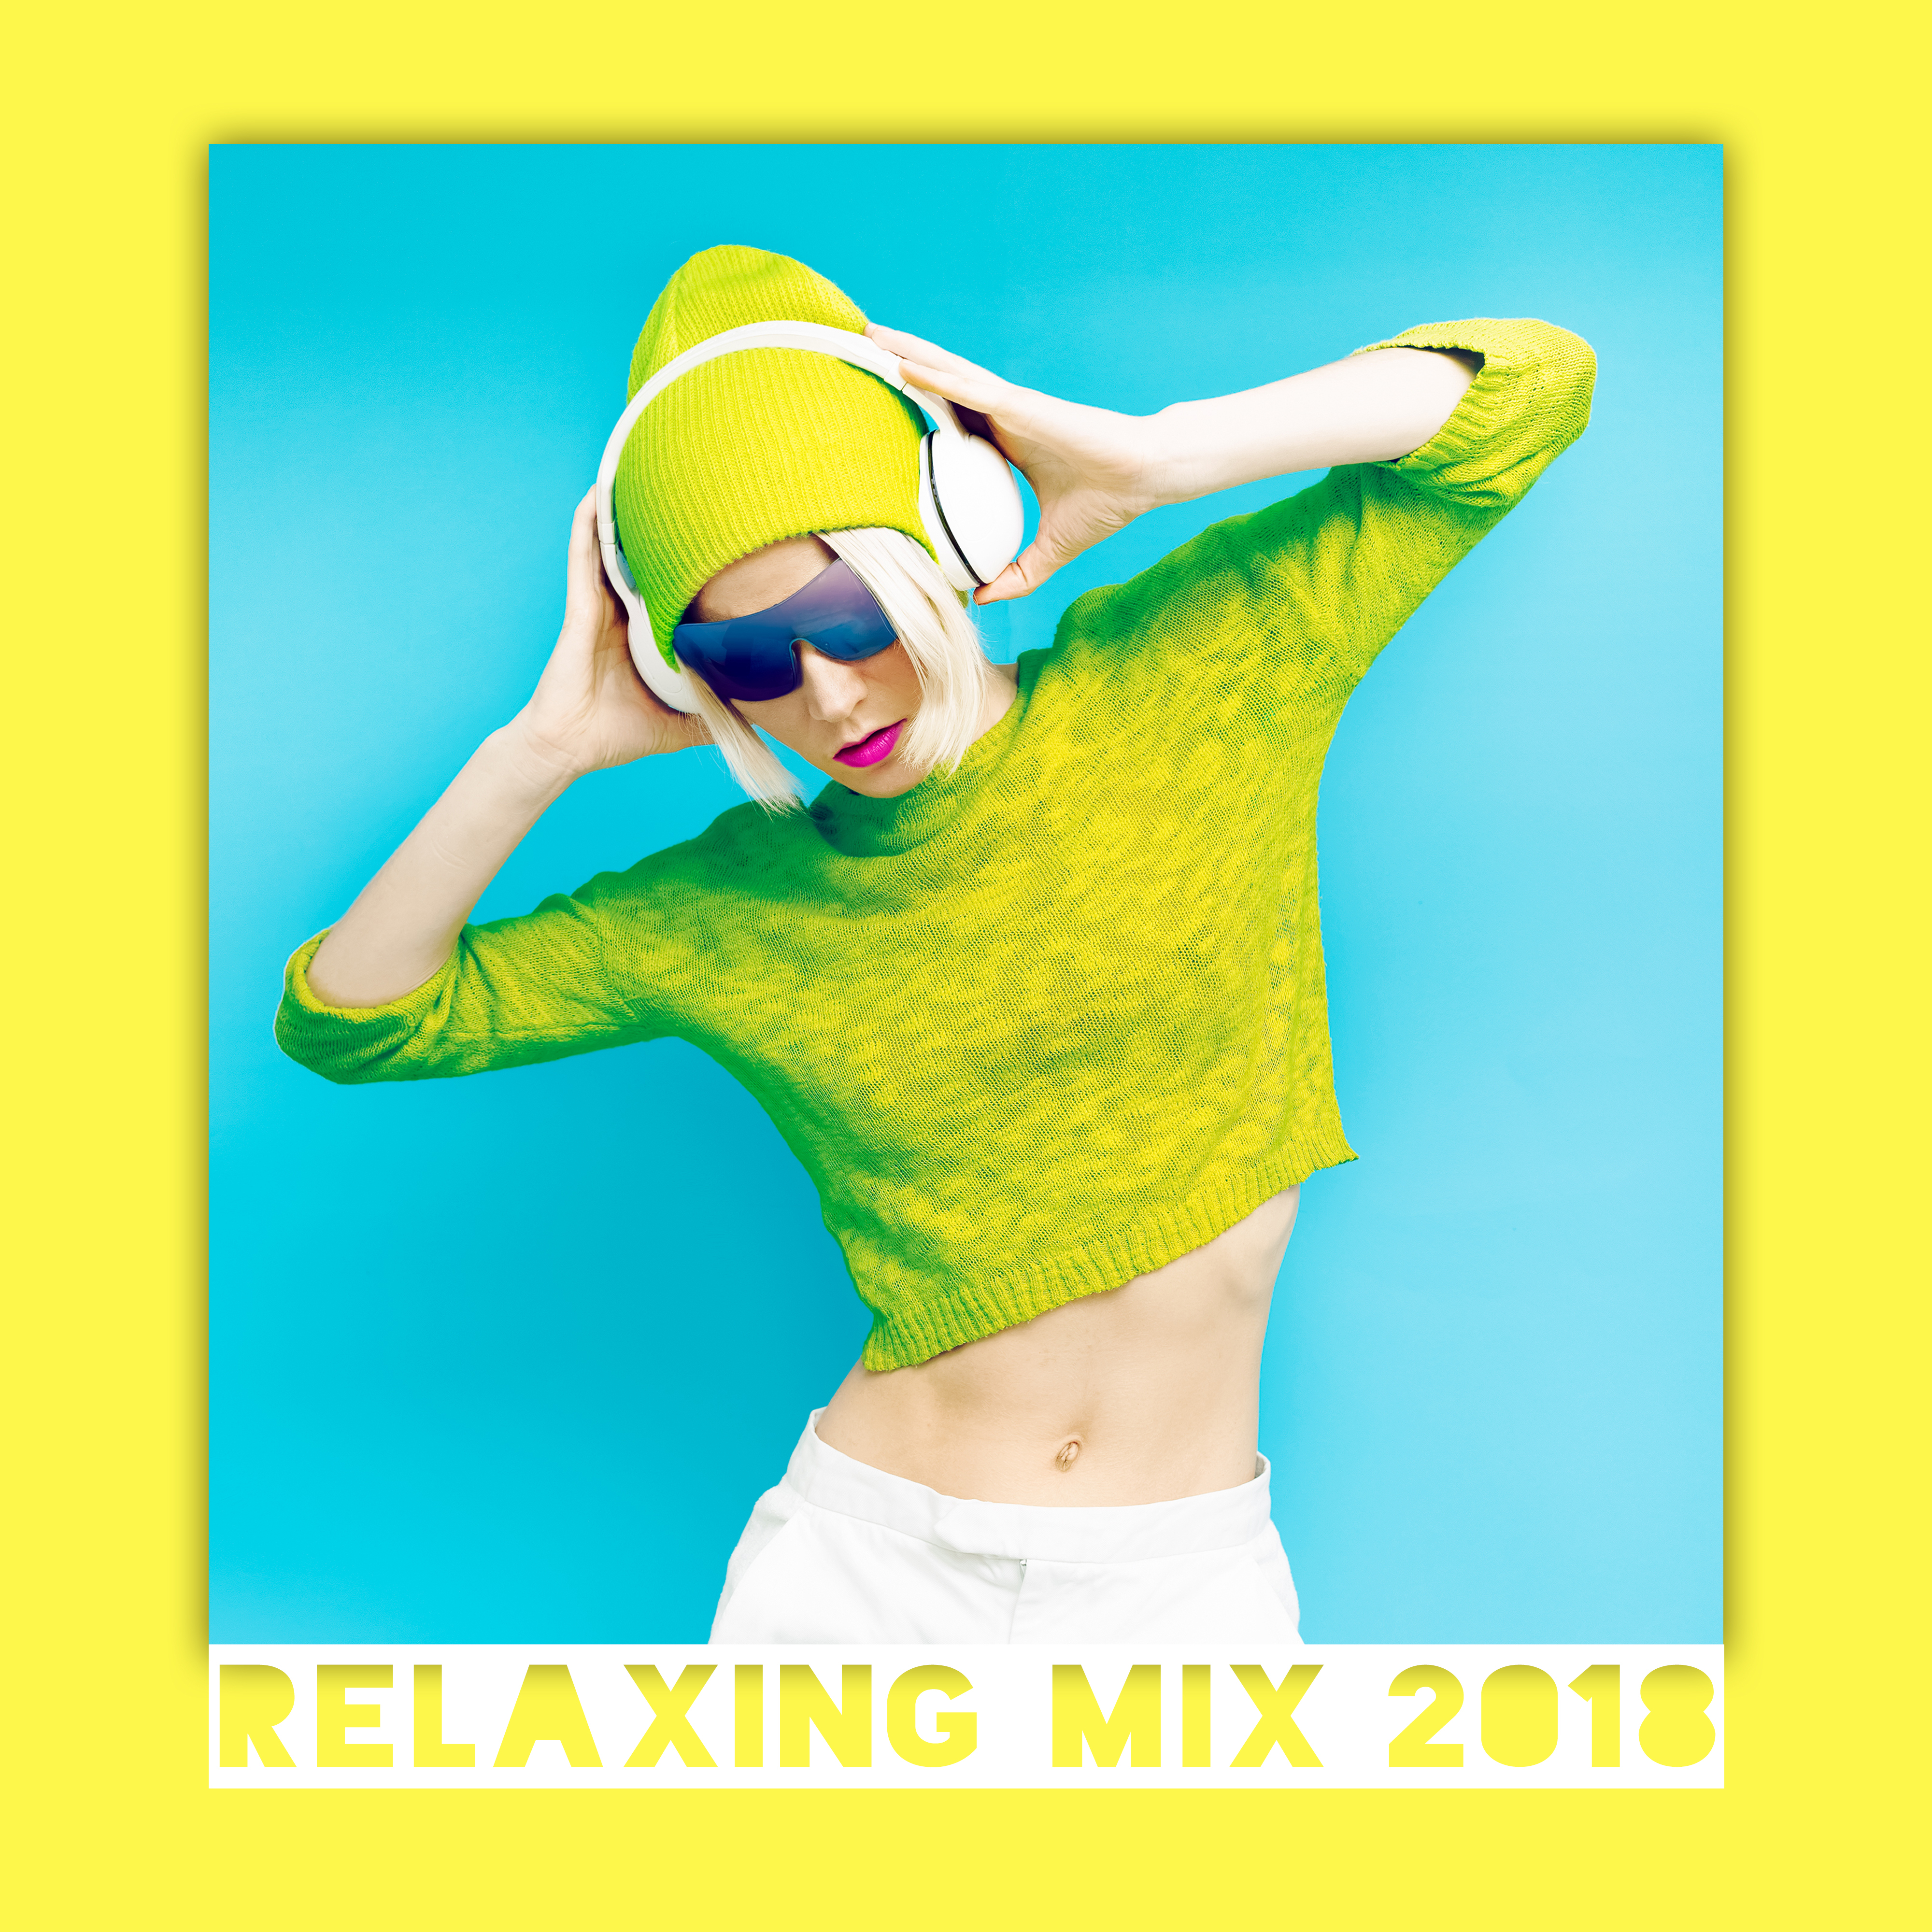 Relaxing Mix 2018